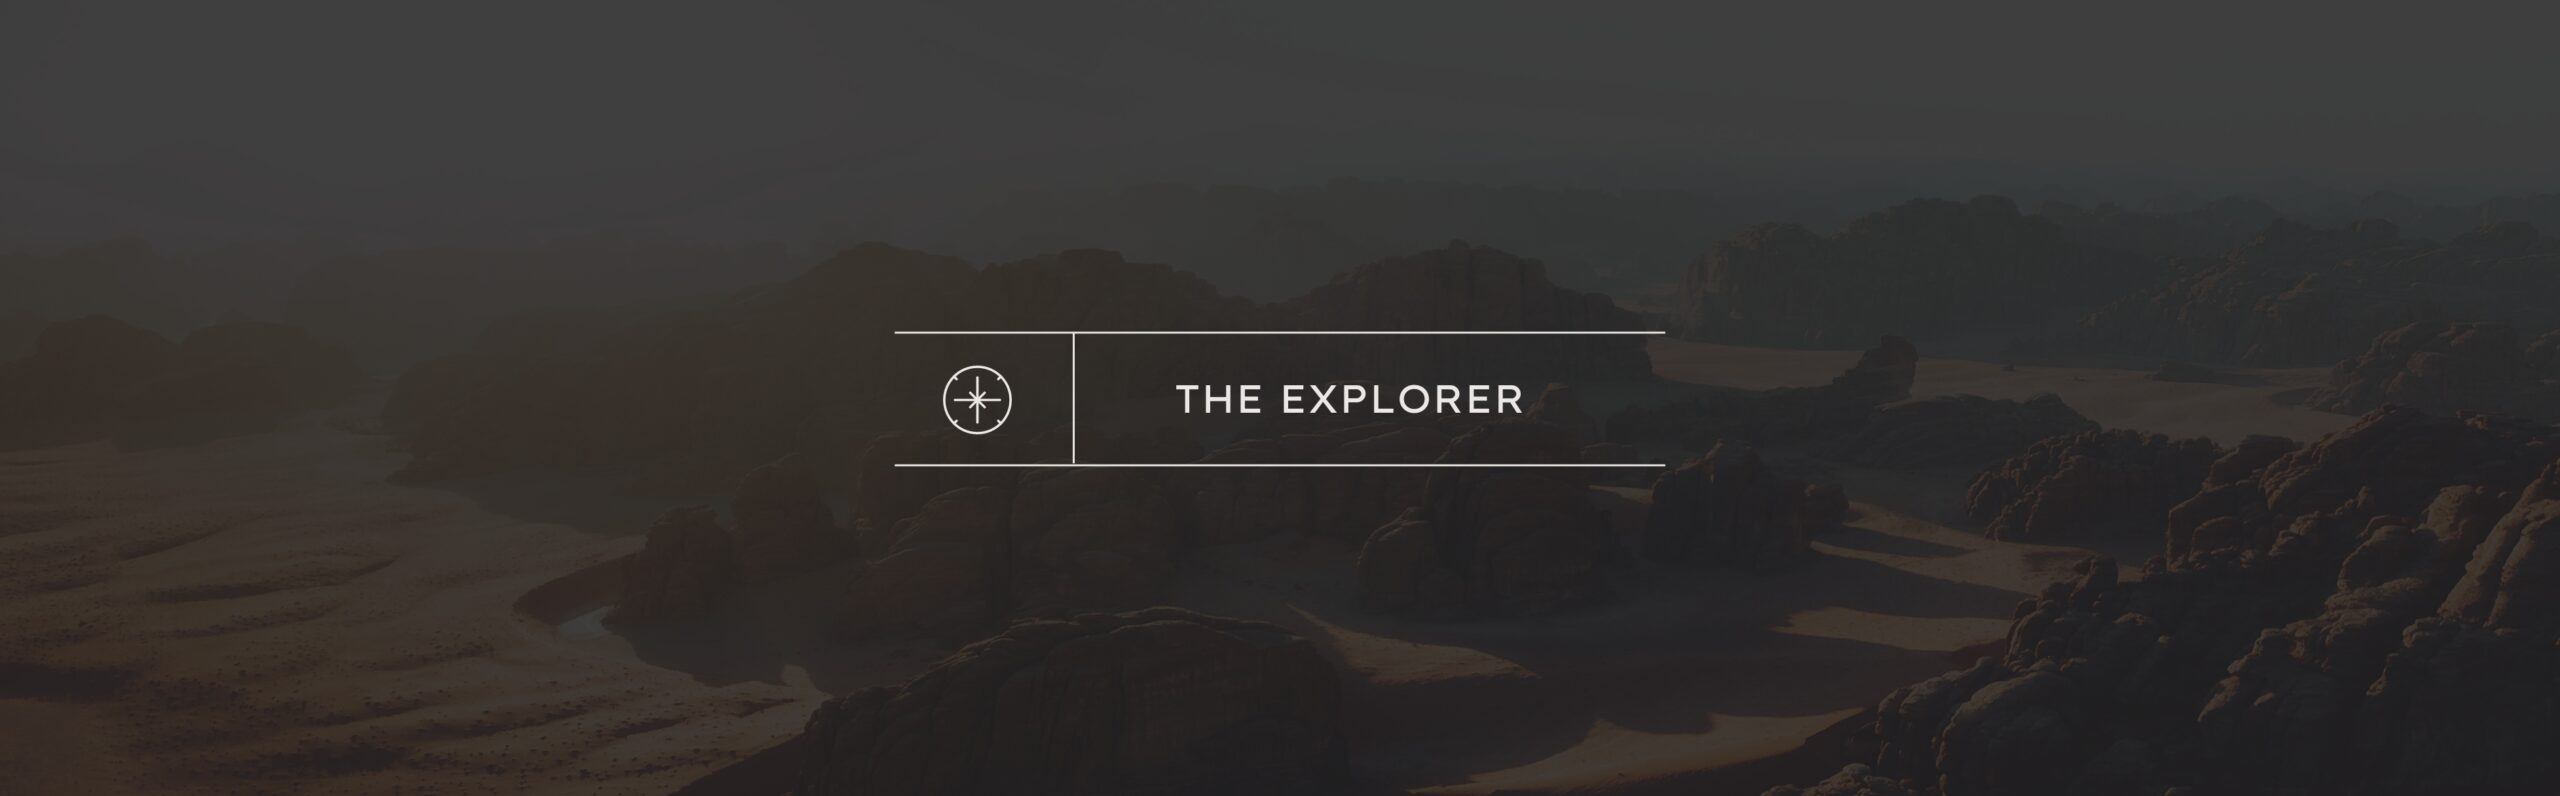 The Explorer Archetype - Astute Communications